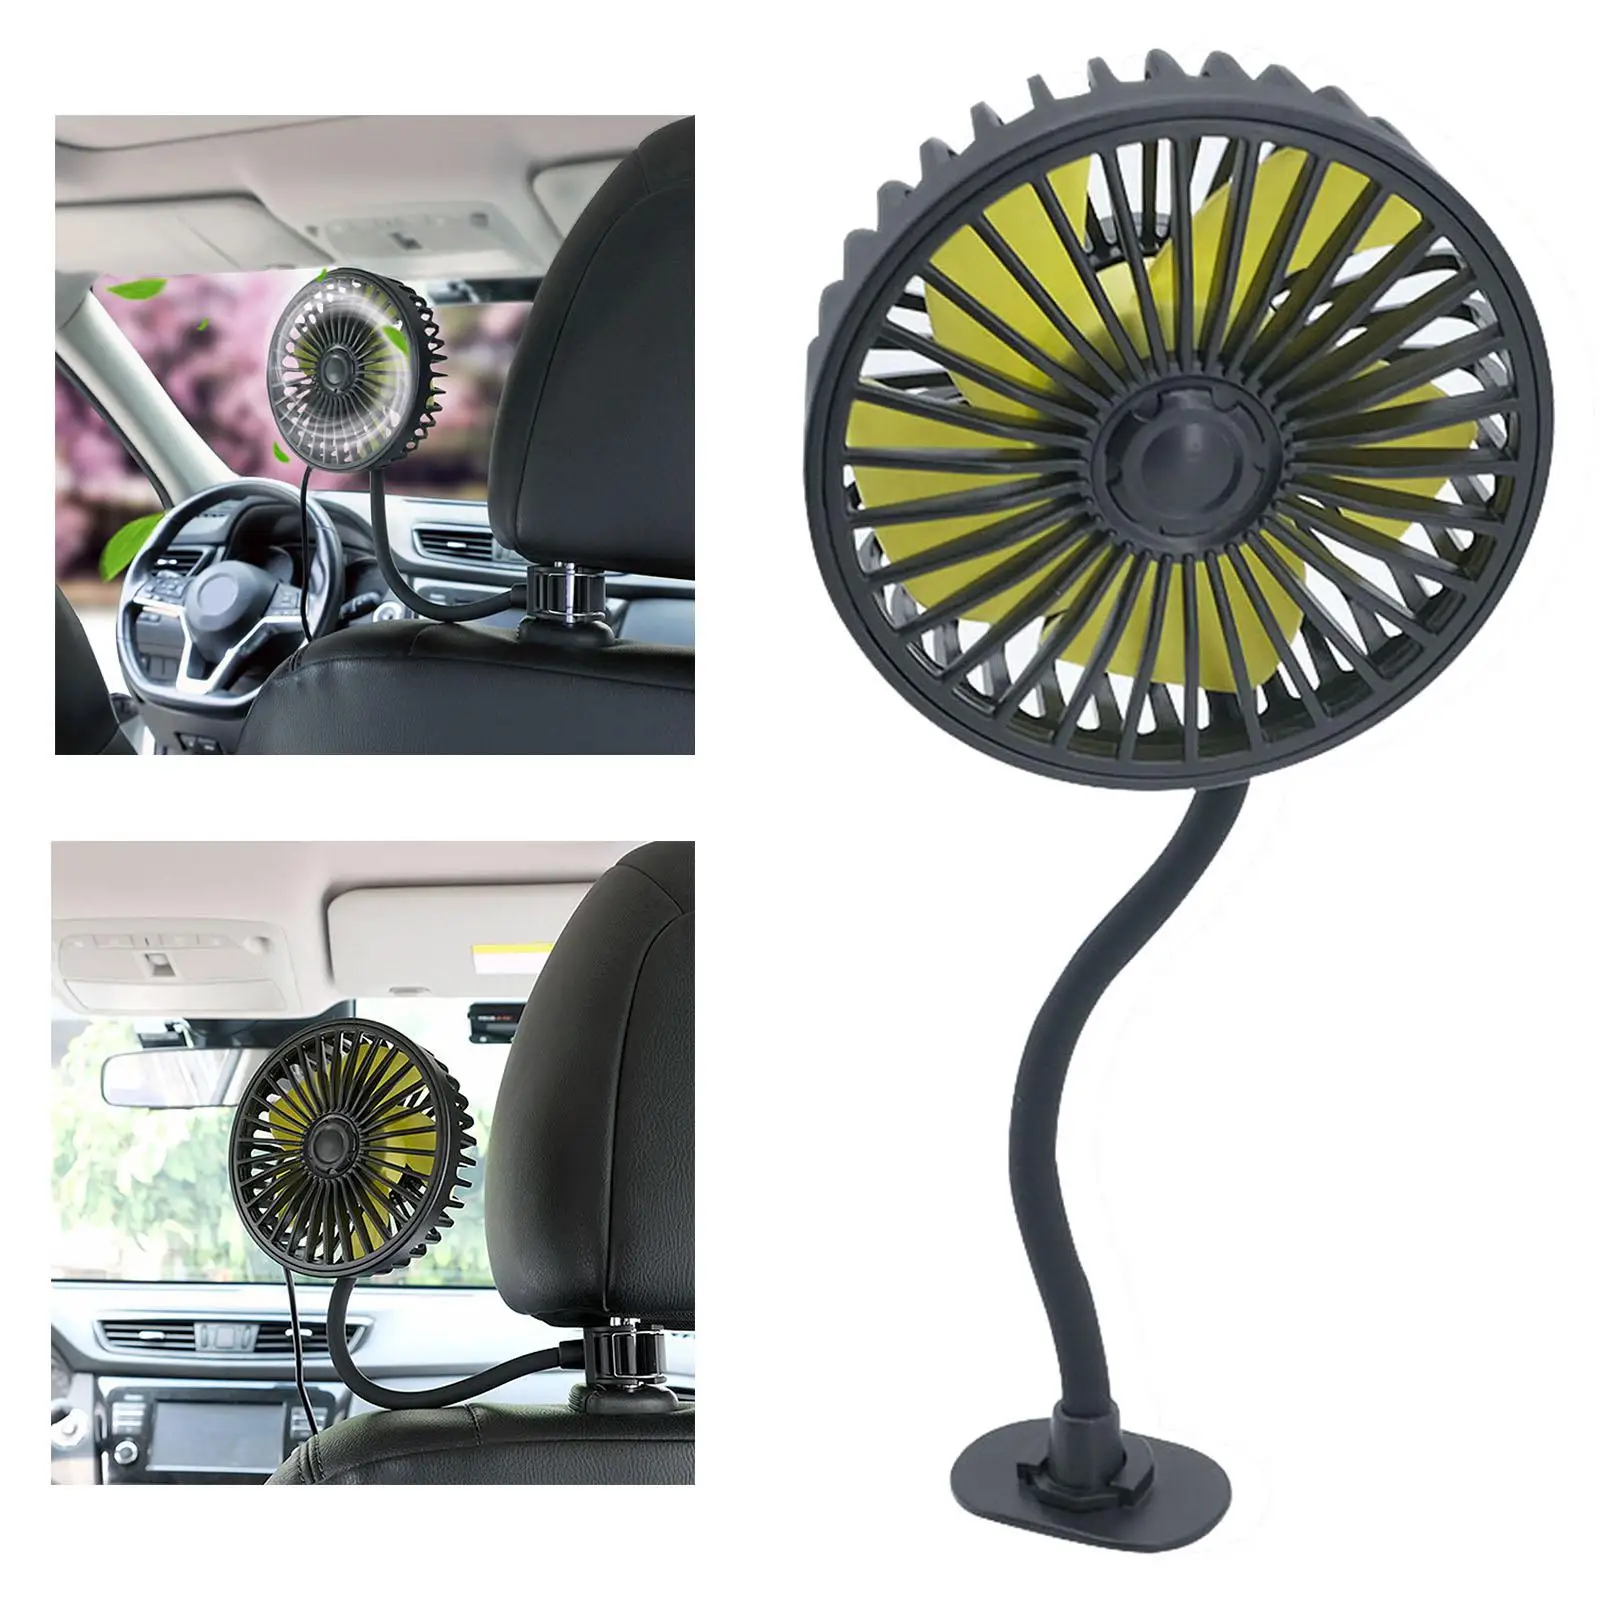 USB Car Cooling Fan Golf Cart Fan Dashboard 3 Speeds Strong 360 Rotation Air Circulation Fan for Outdoor, SUV, Summer,